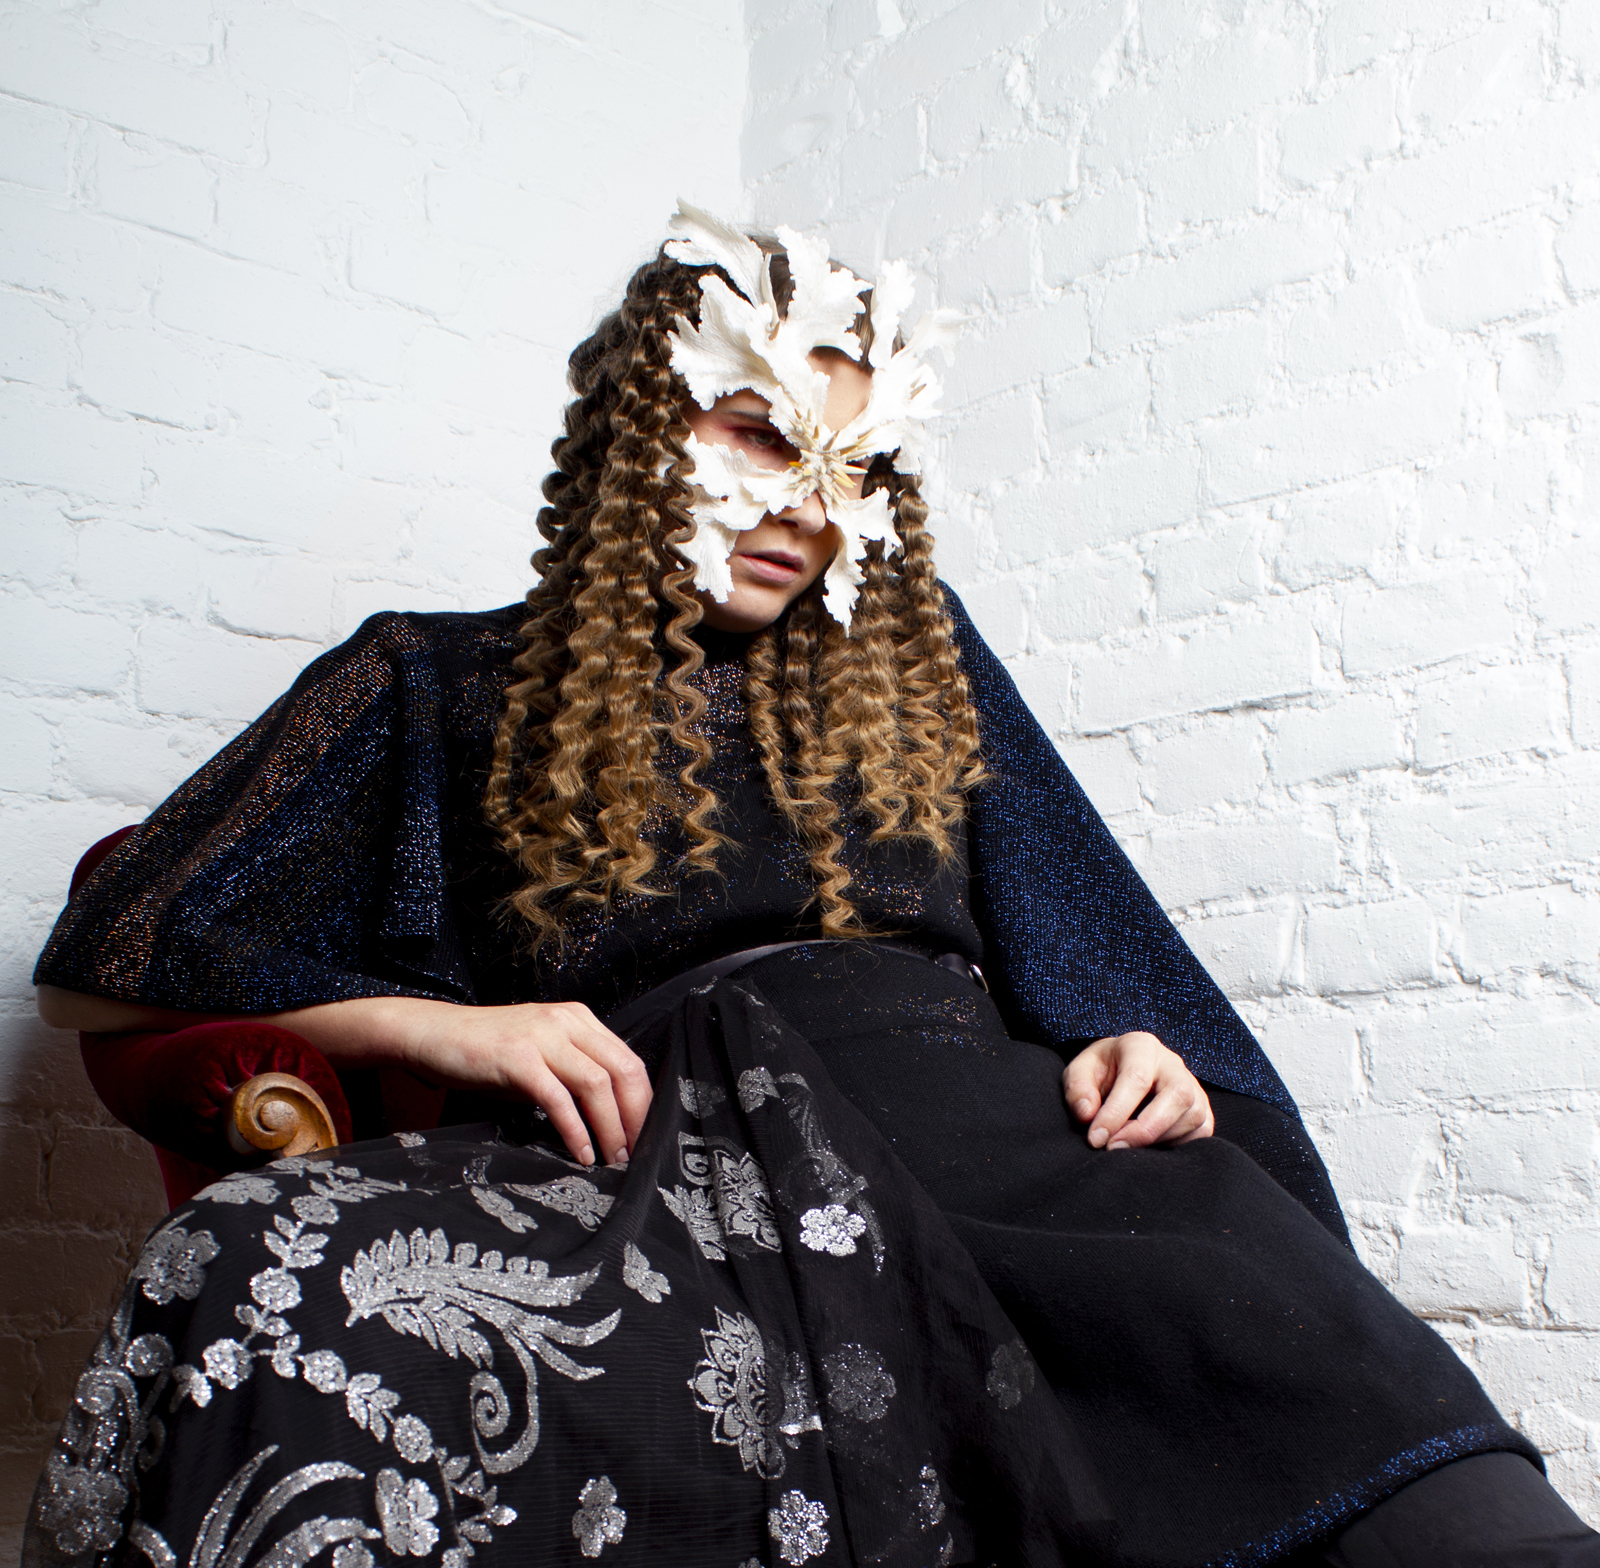 Synne Sanden wearing "The Lonely Beast III" mask I Photo by Ellinor Egeberg I Hair by Malin Wallin I Dress by Tonje Plur